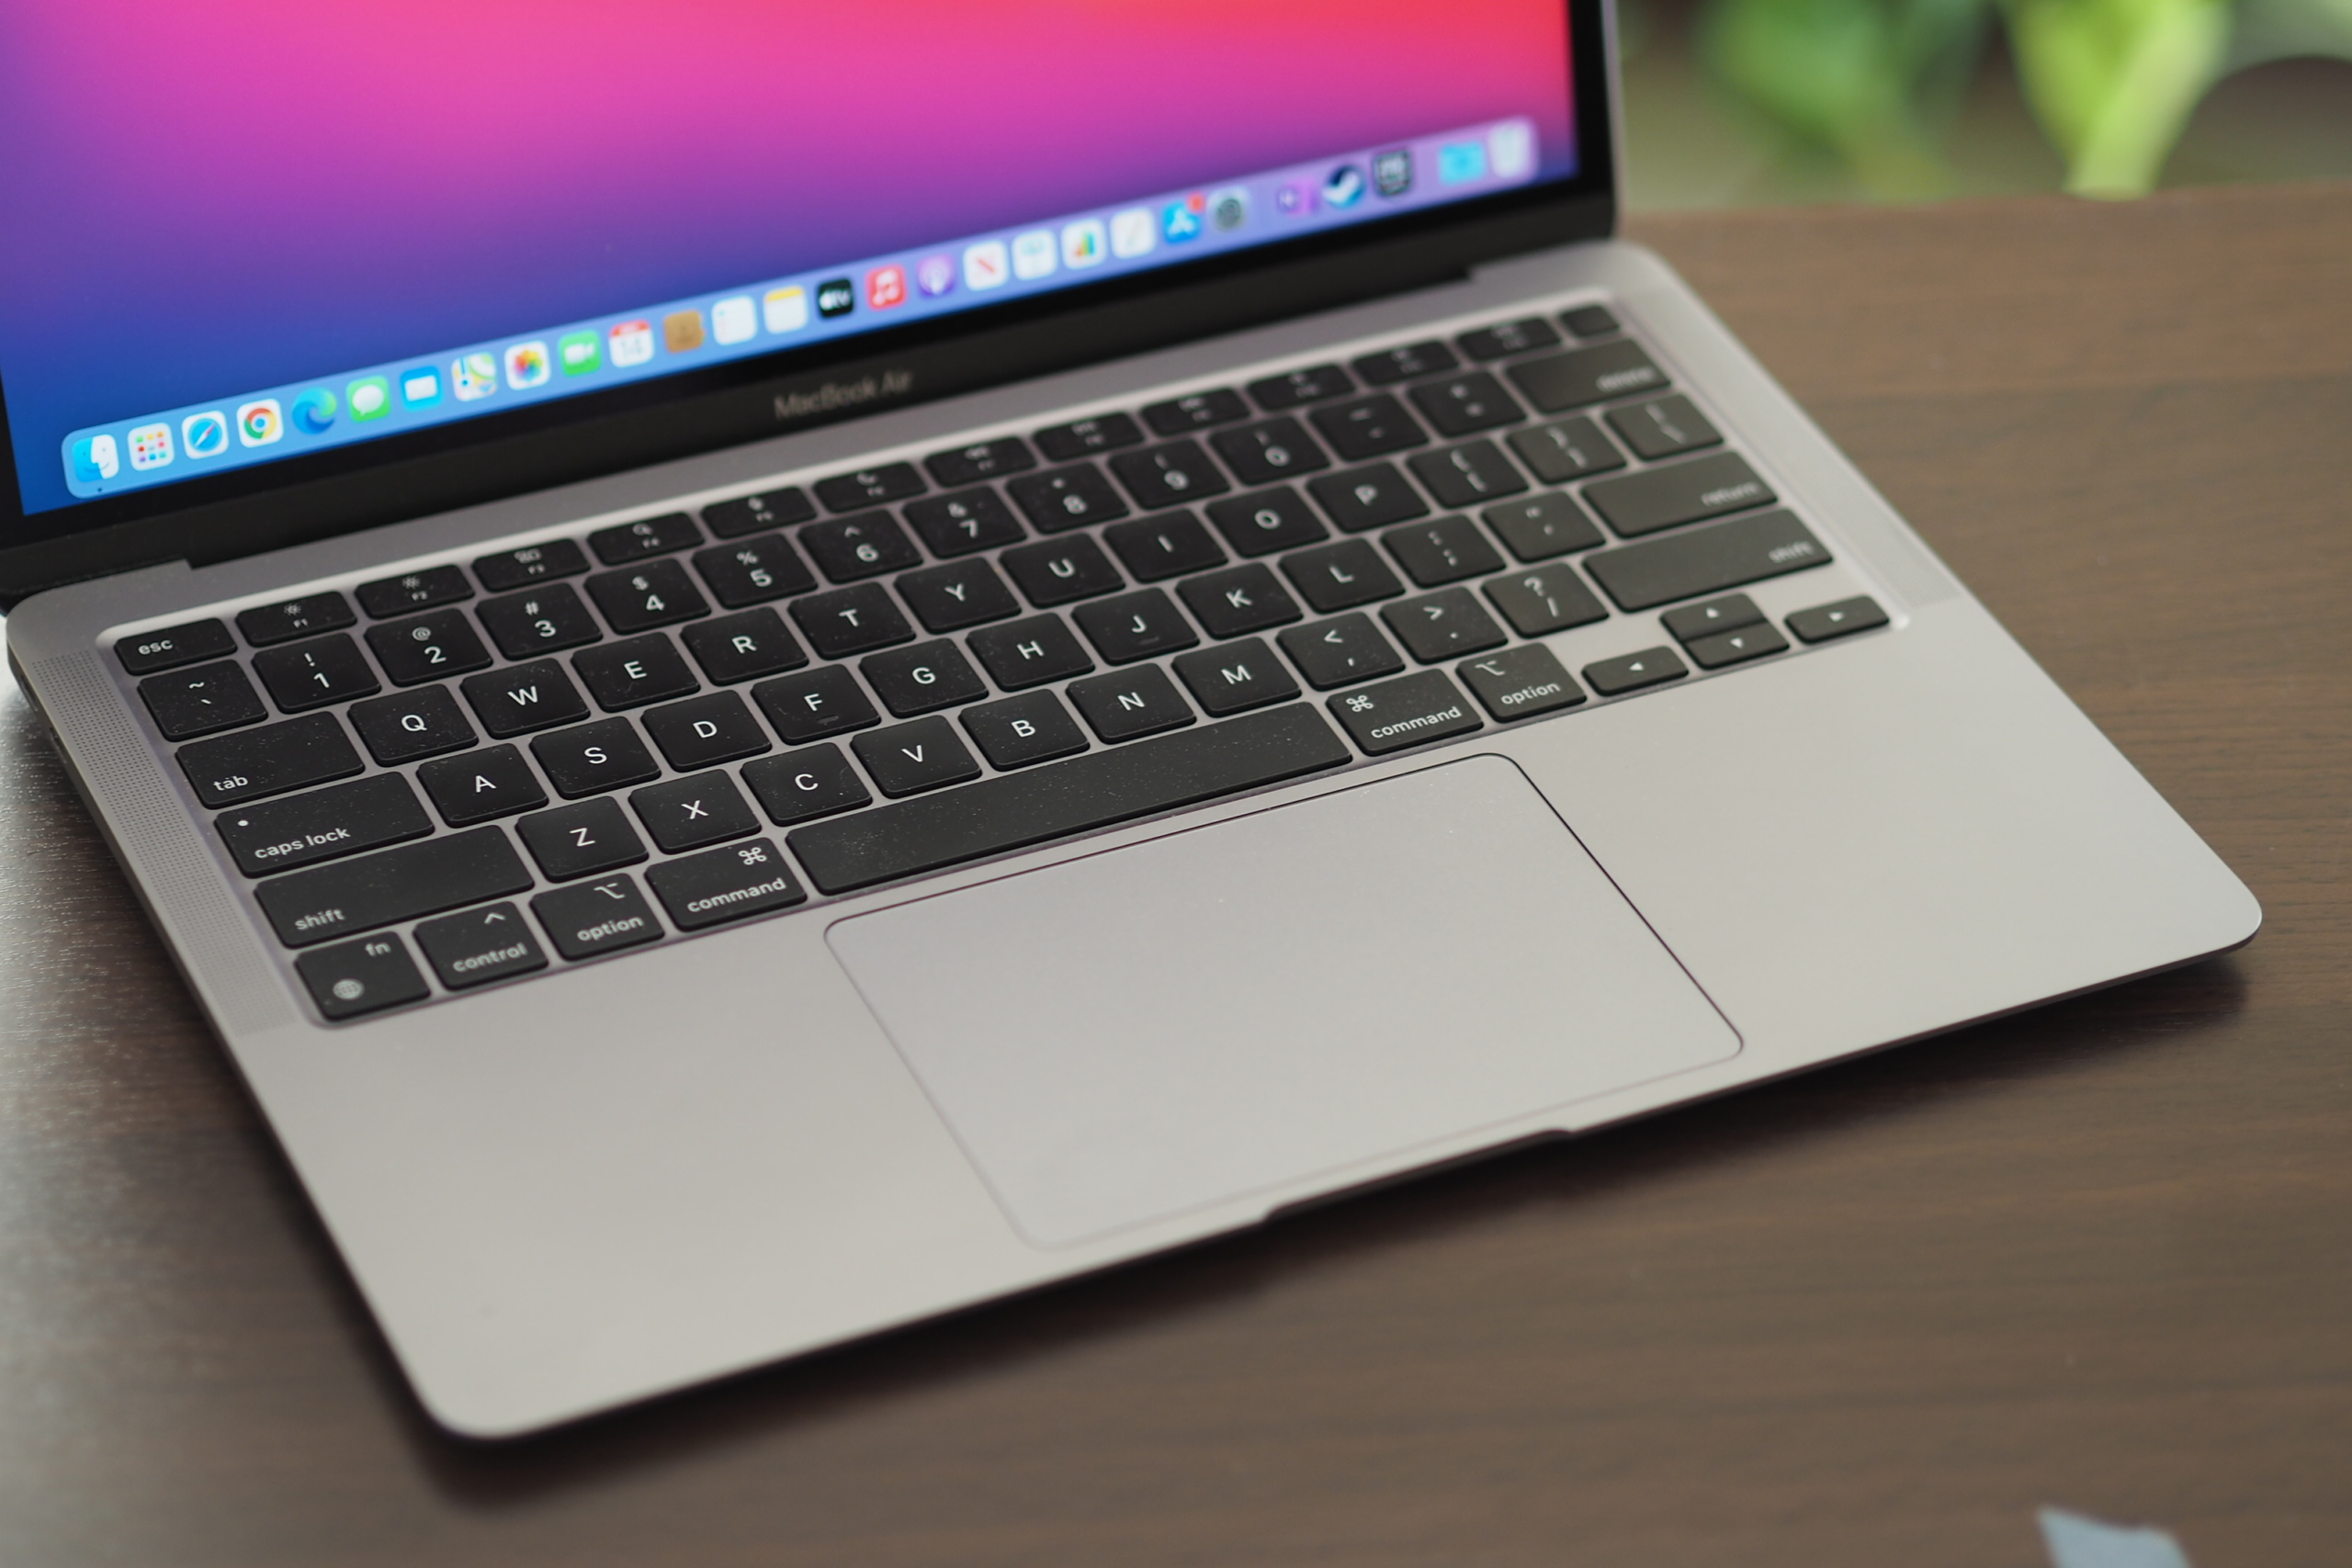 Apple MacBook Air M1 Review: Fast, Fanless, and Fantastic